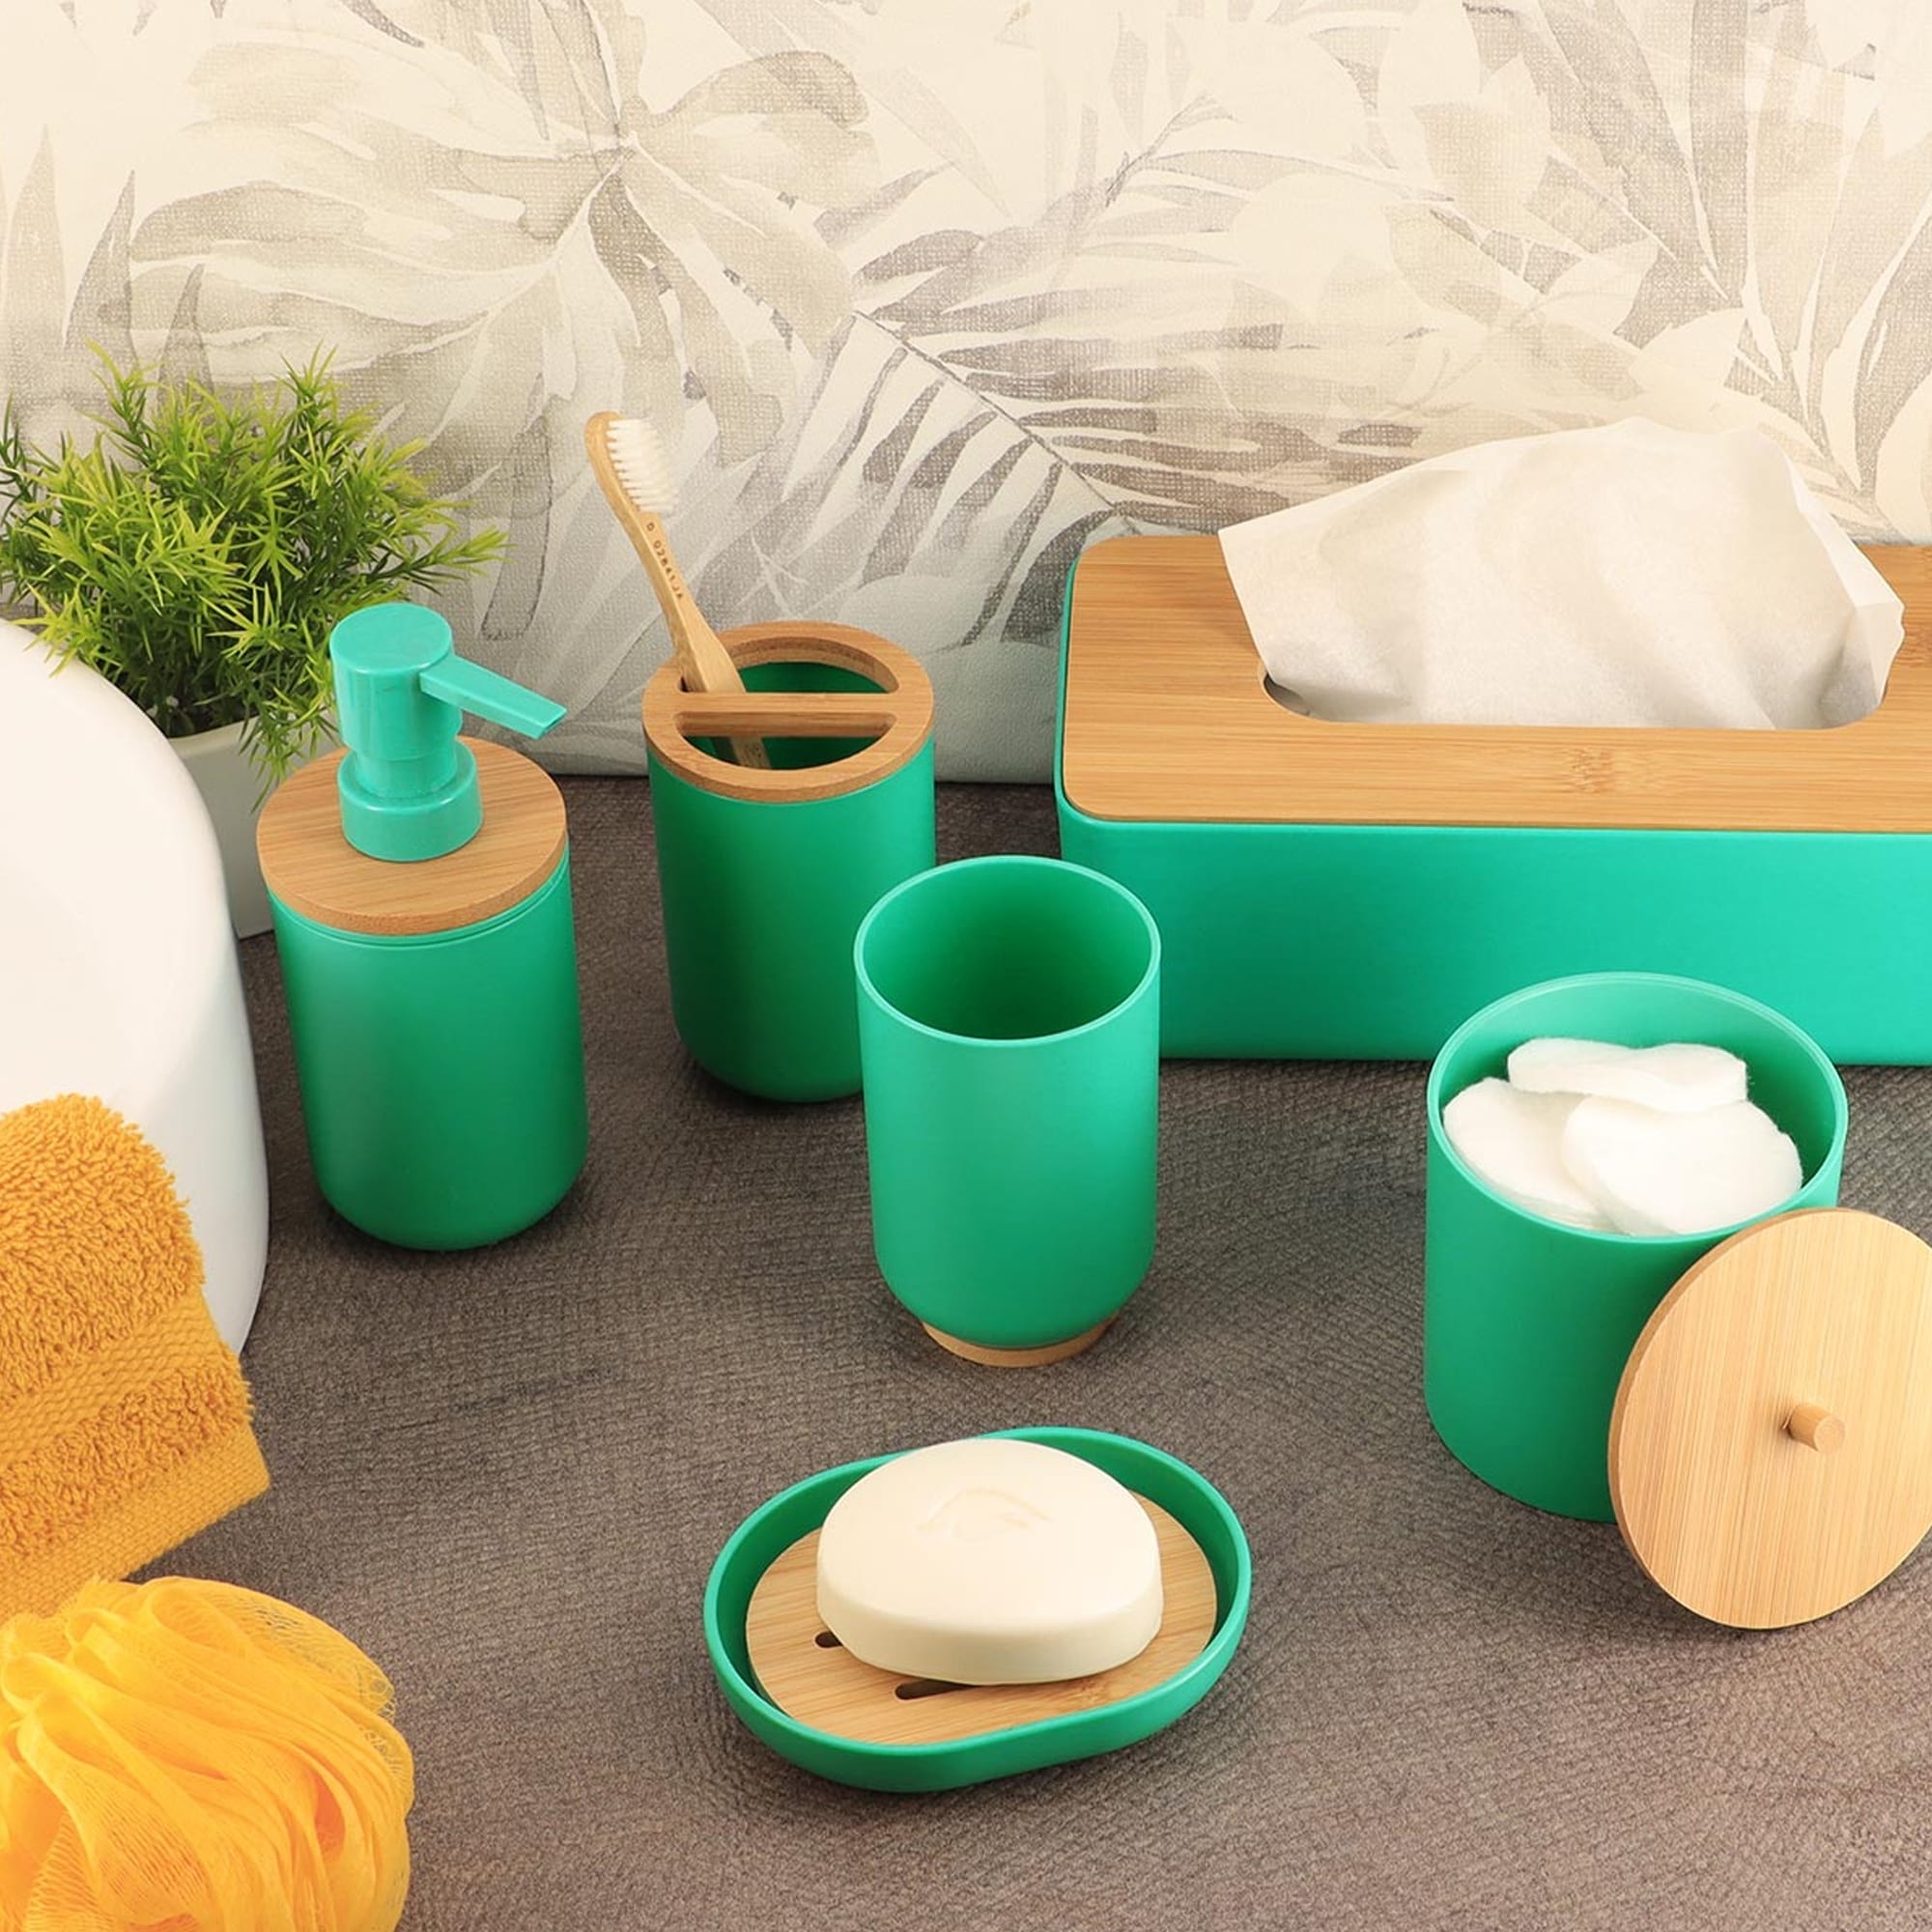 Padang Bathroom Accessories Set Bamboo - On Sale - Bed Bath & Beyond -  35447699